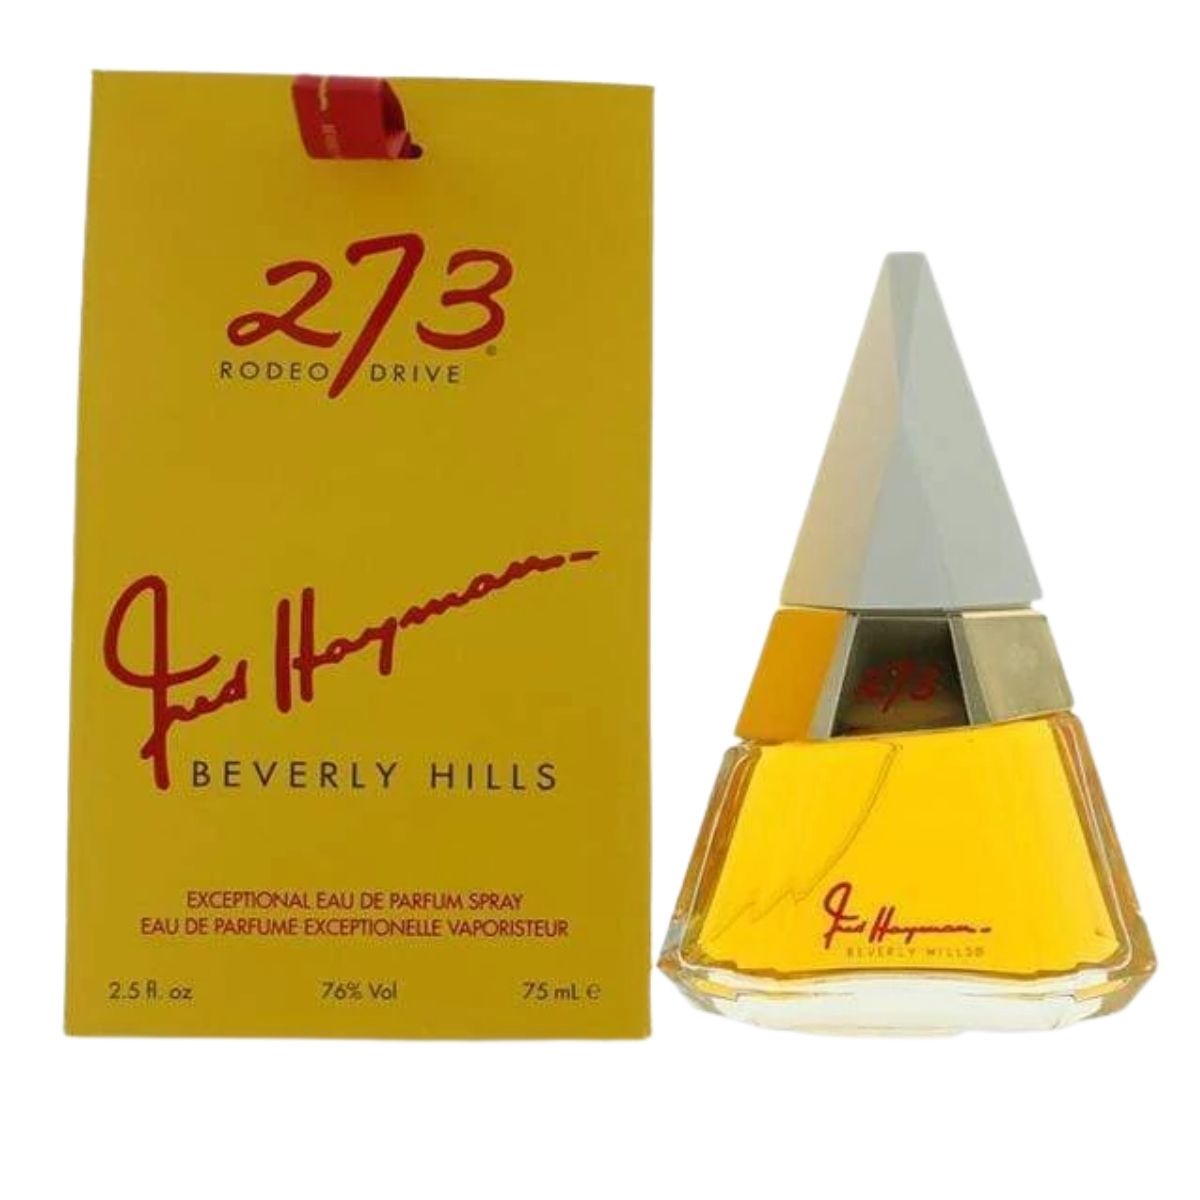 273 RODEO DRIVE Fred Hayman Women Perfume Edp Oz NEW IN BOX, 46% OFF